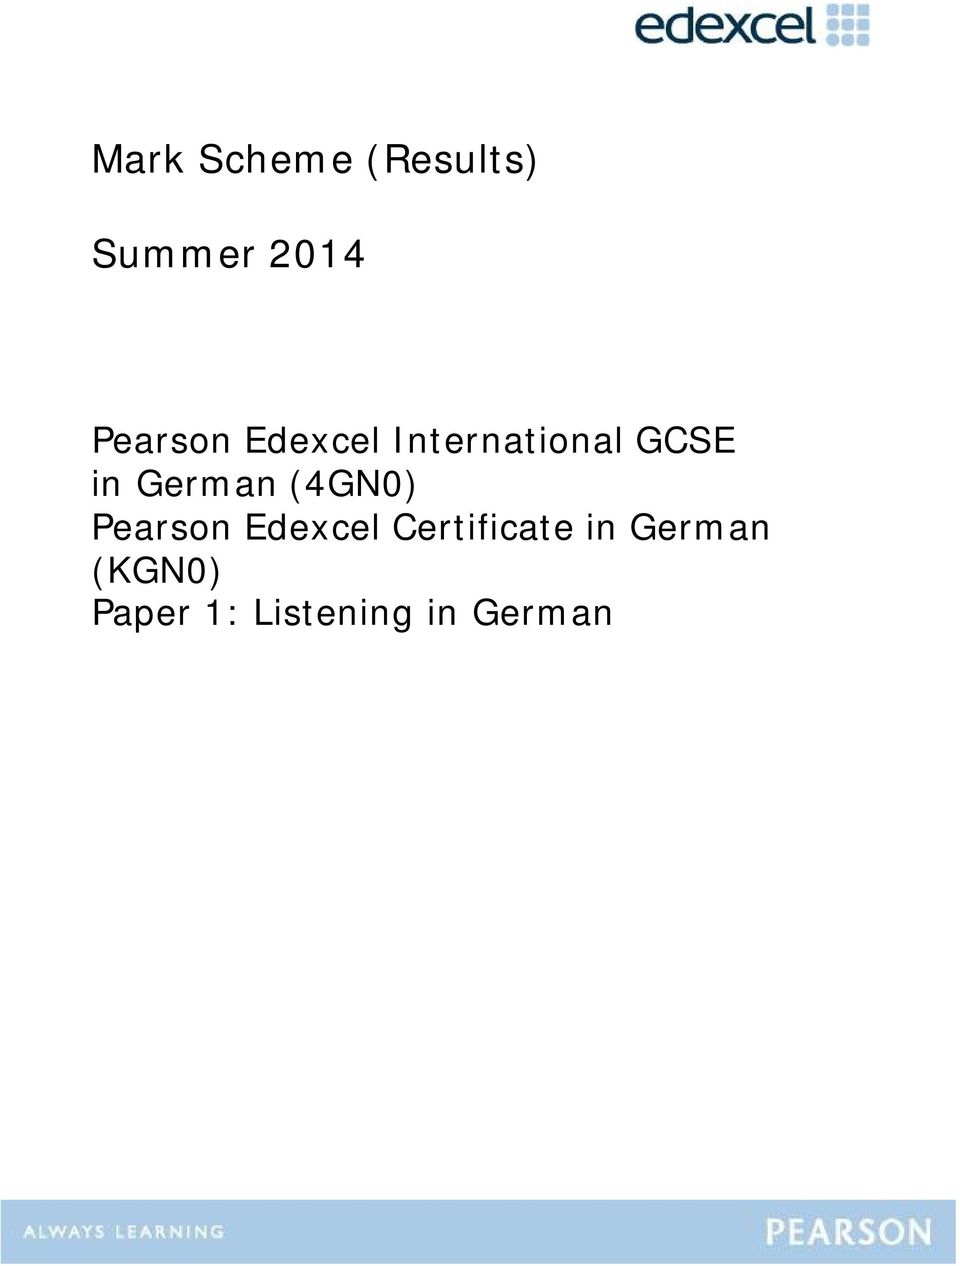 (4GN0) Pearson Edexcel Certificate in